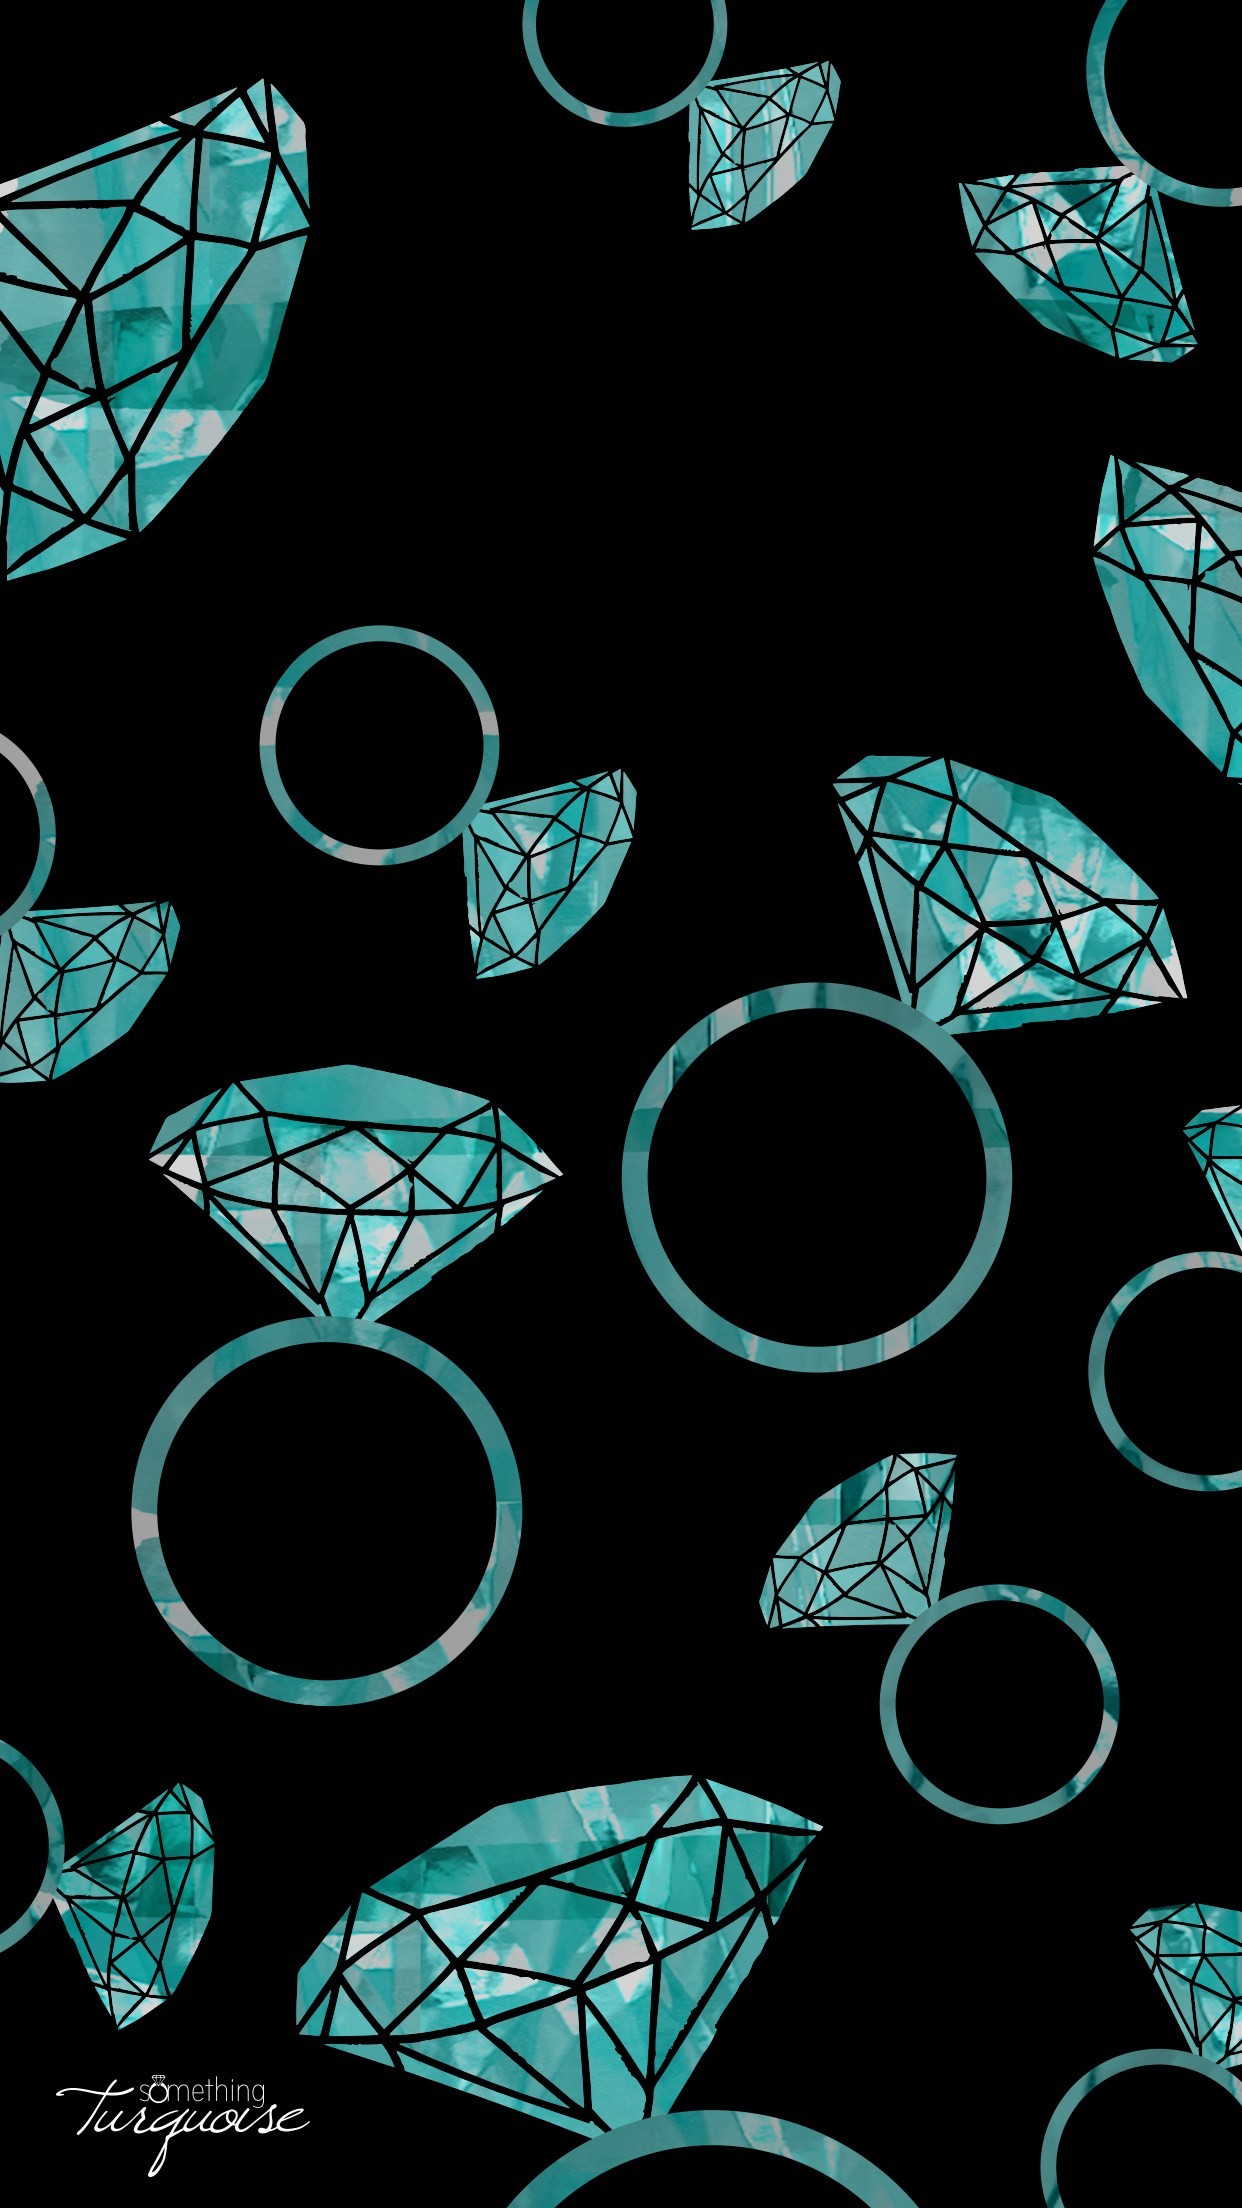 FREE turquoise diamond ring iPhone wallpaper!